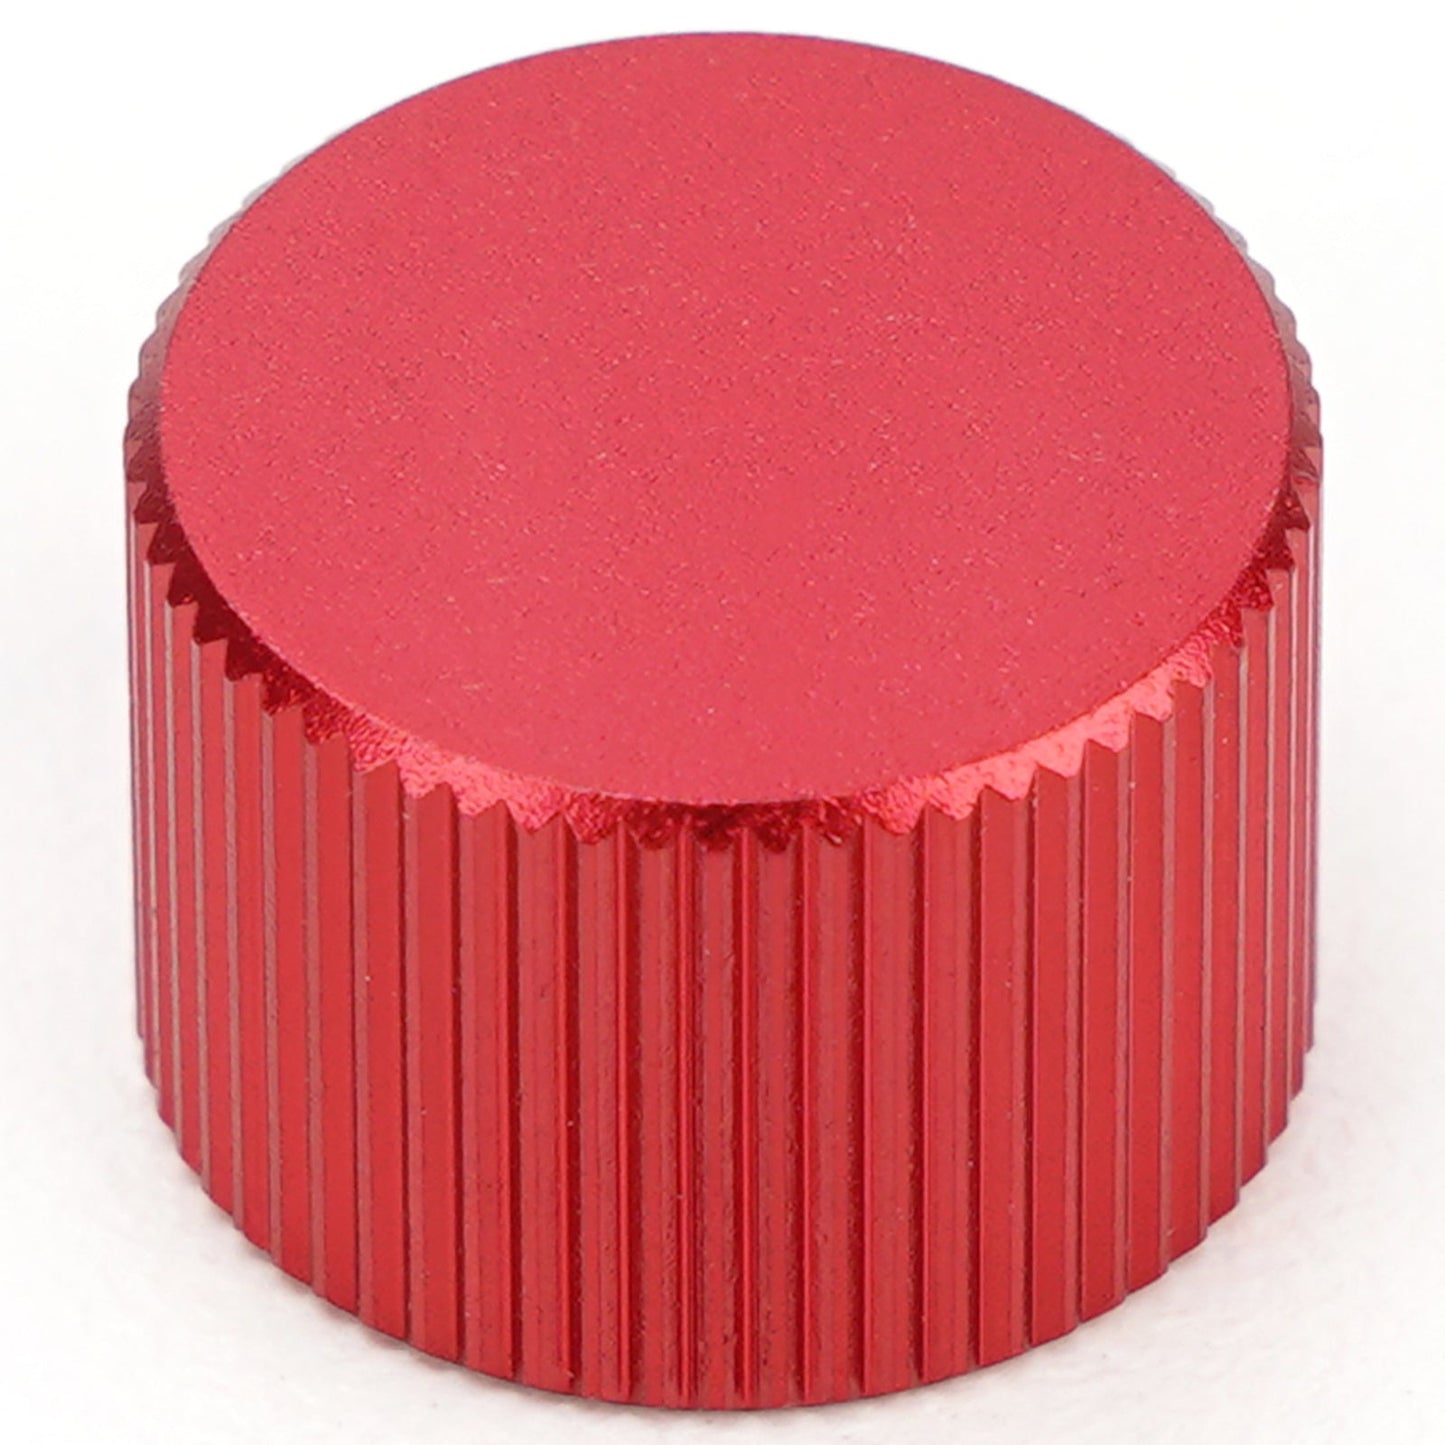 Zoom 65 - Red knob